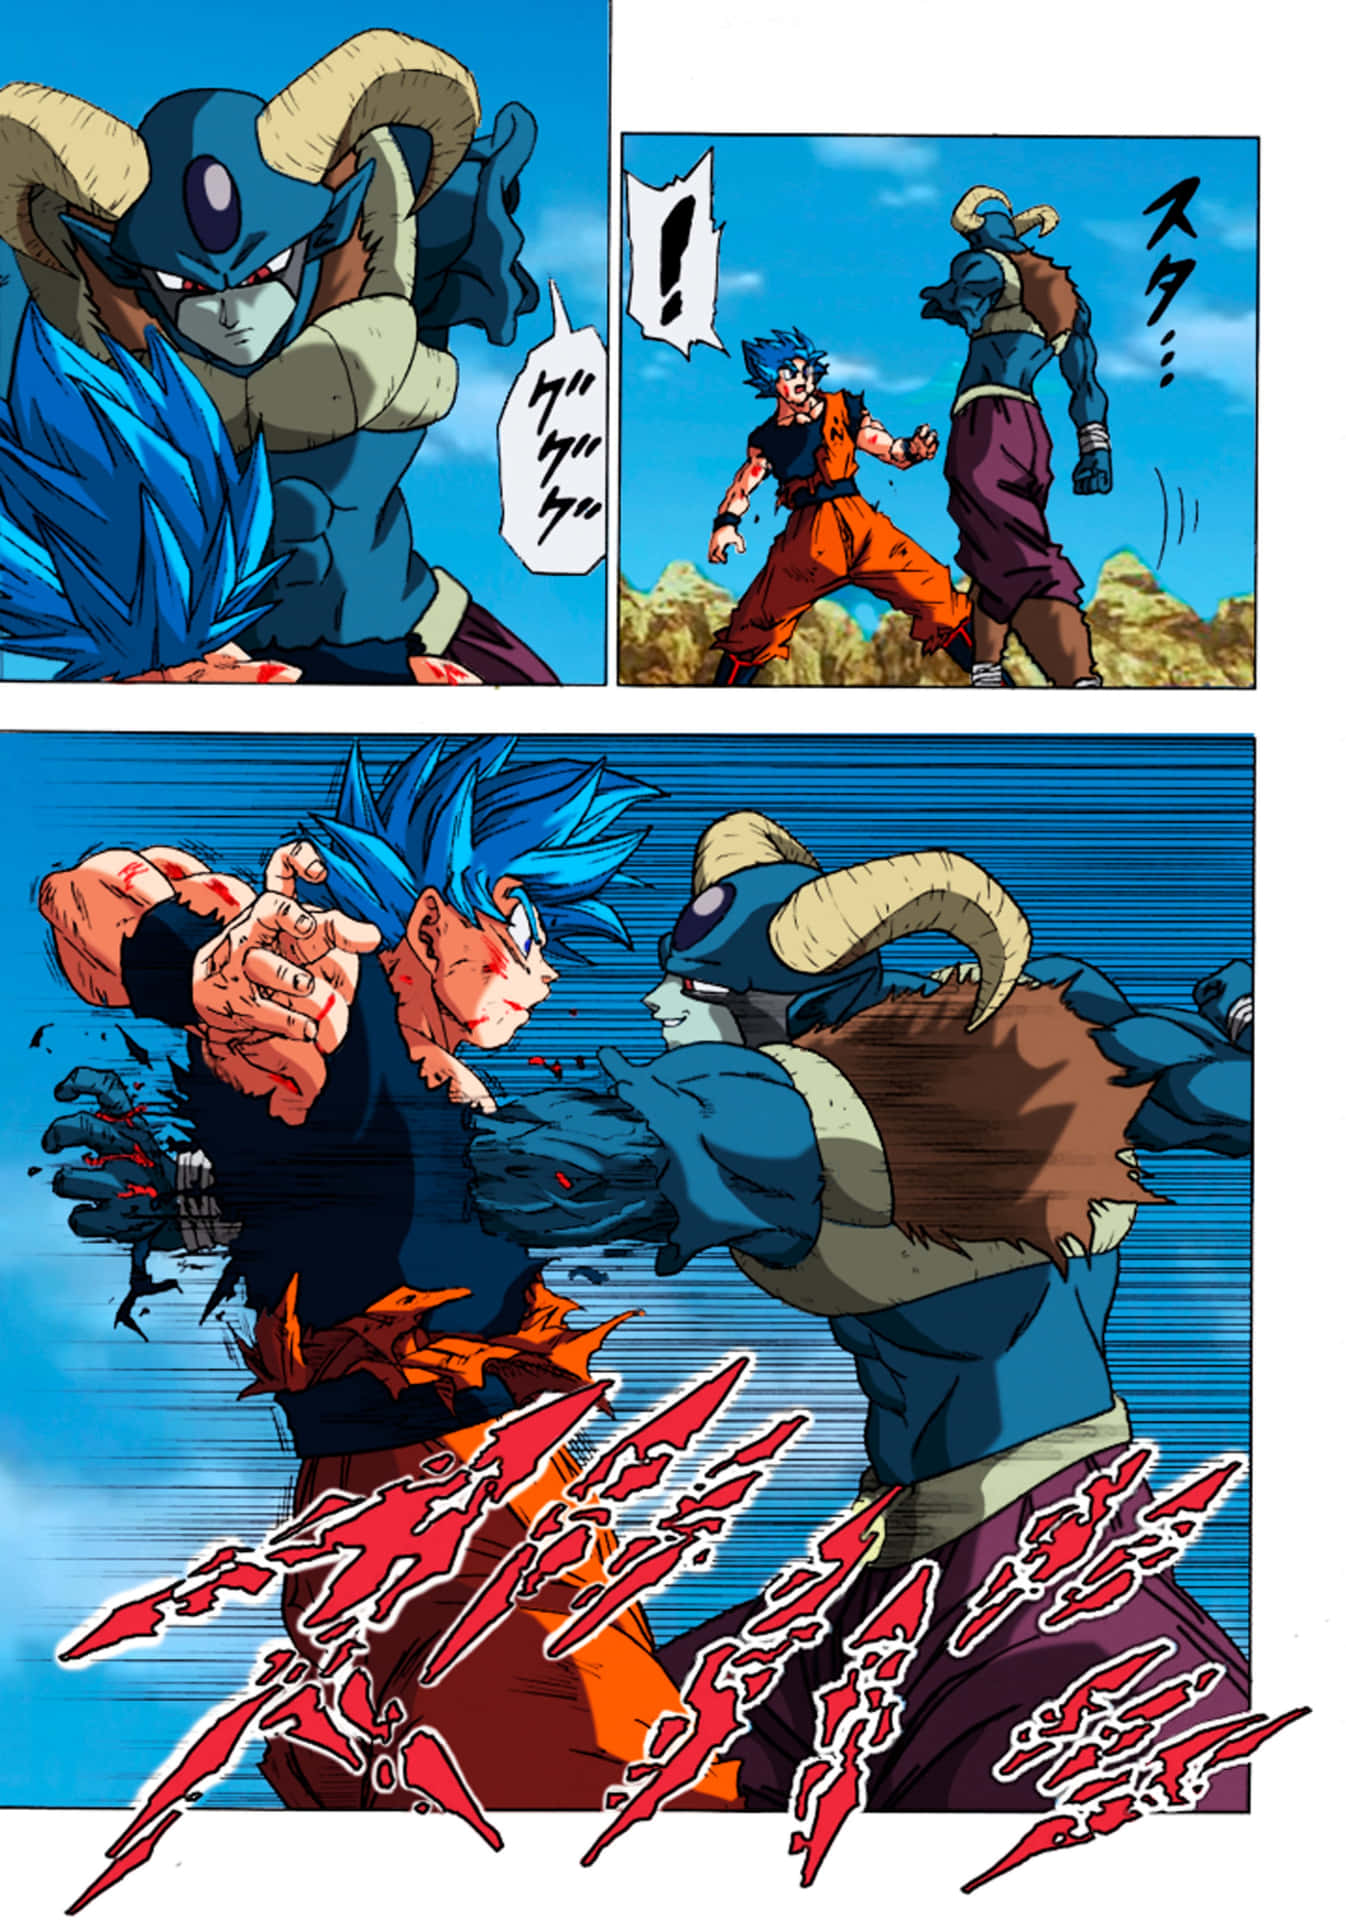 Goku Powers Up In Dragon Ball Super Manga Wallpaper